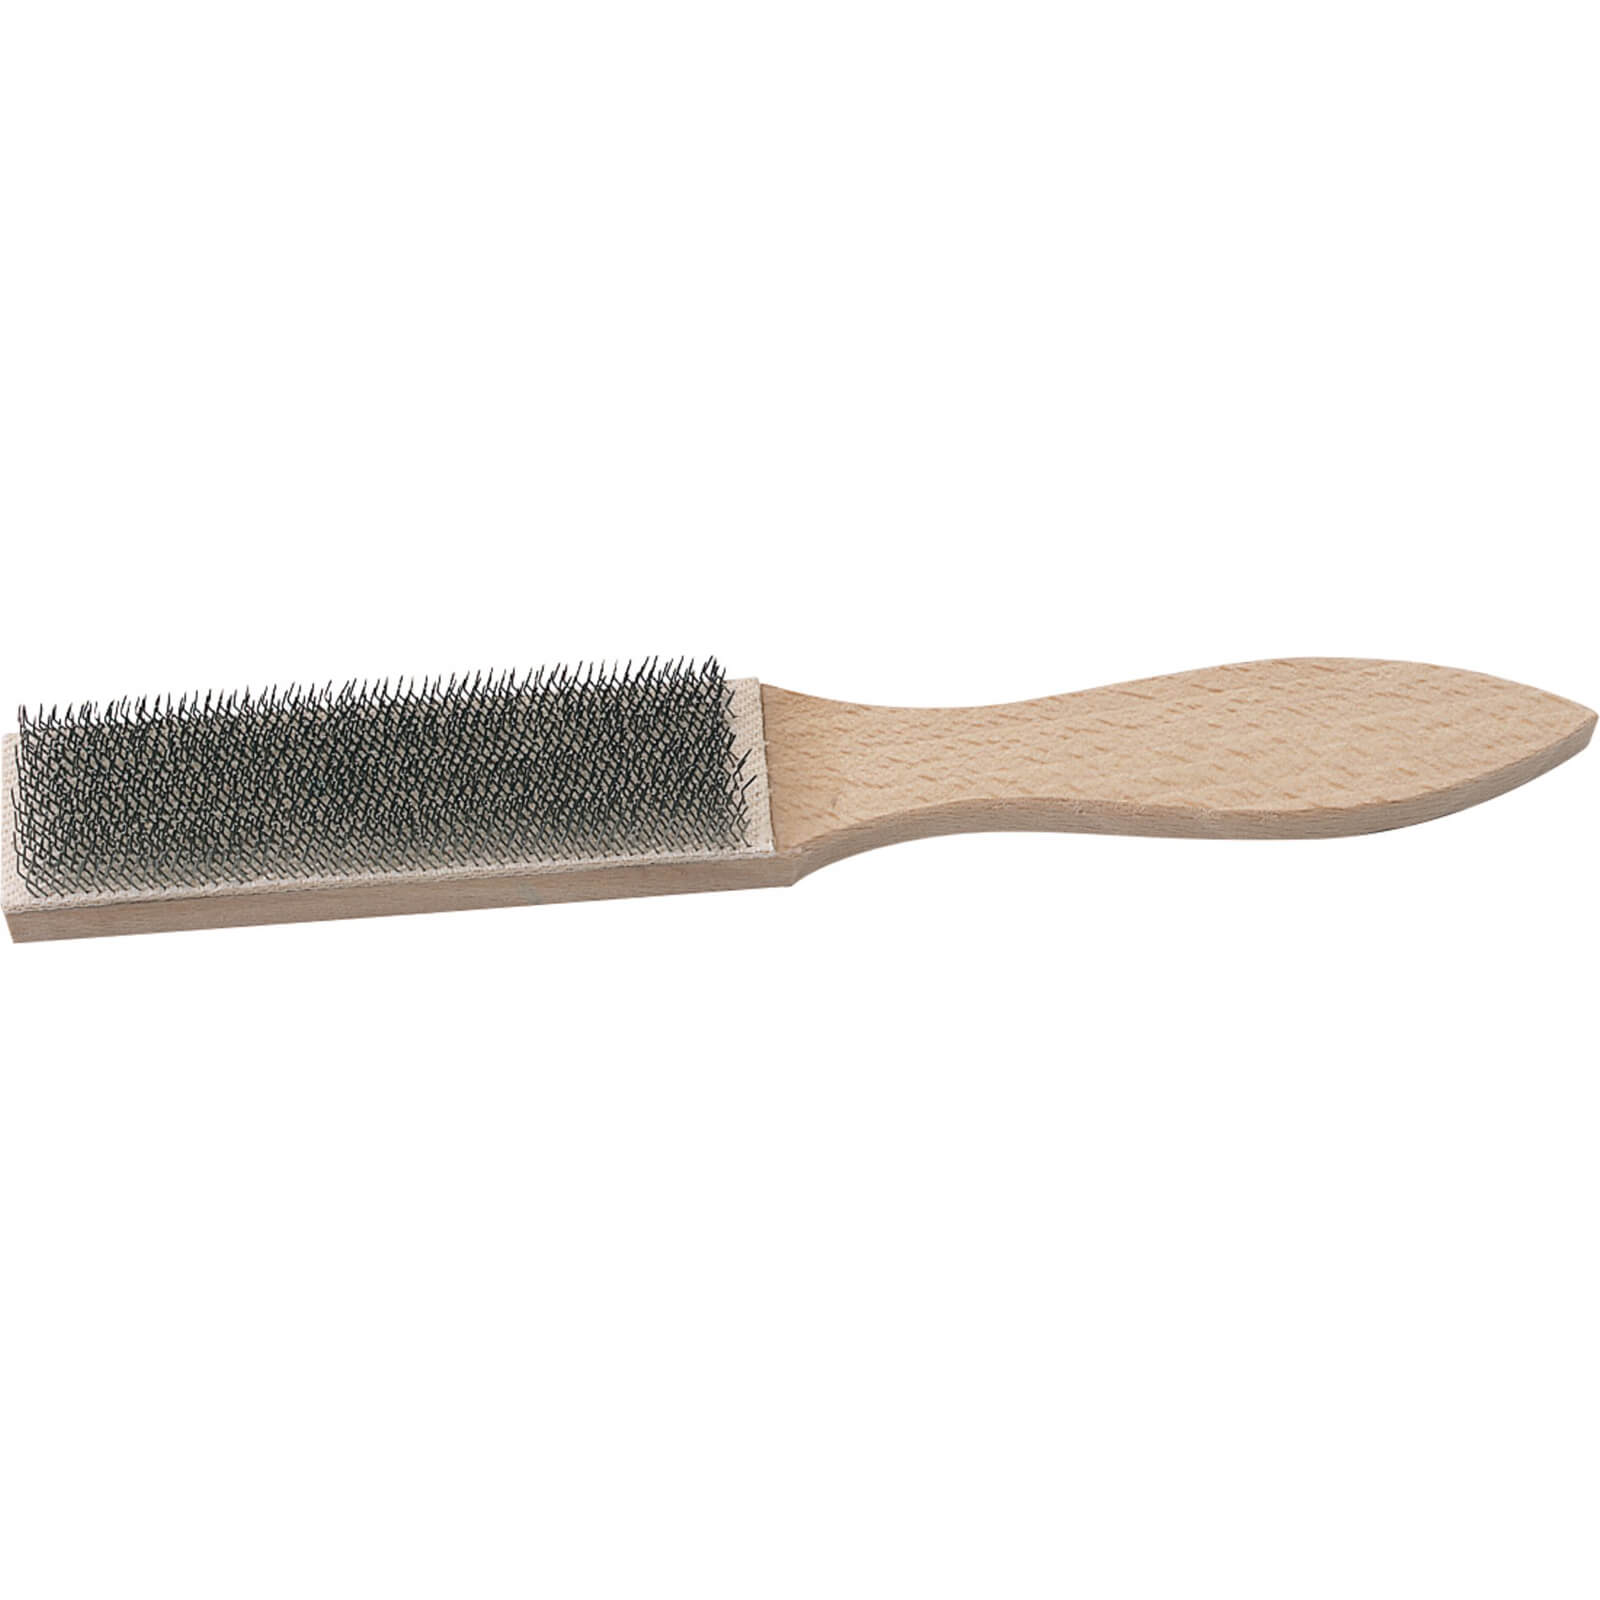 Image of Draper File Cleaning Brush